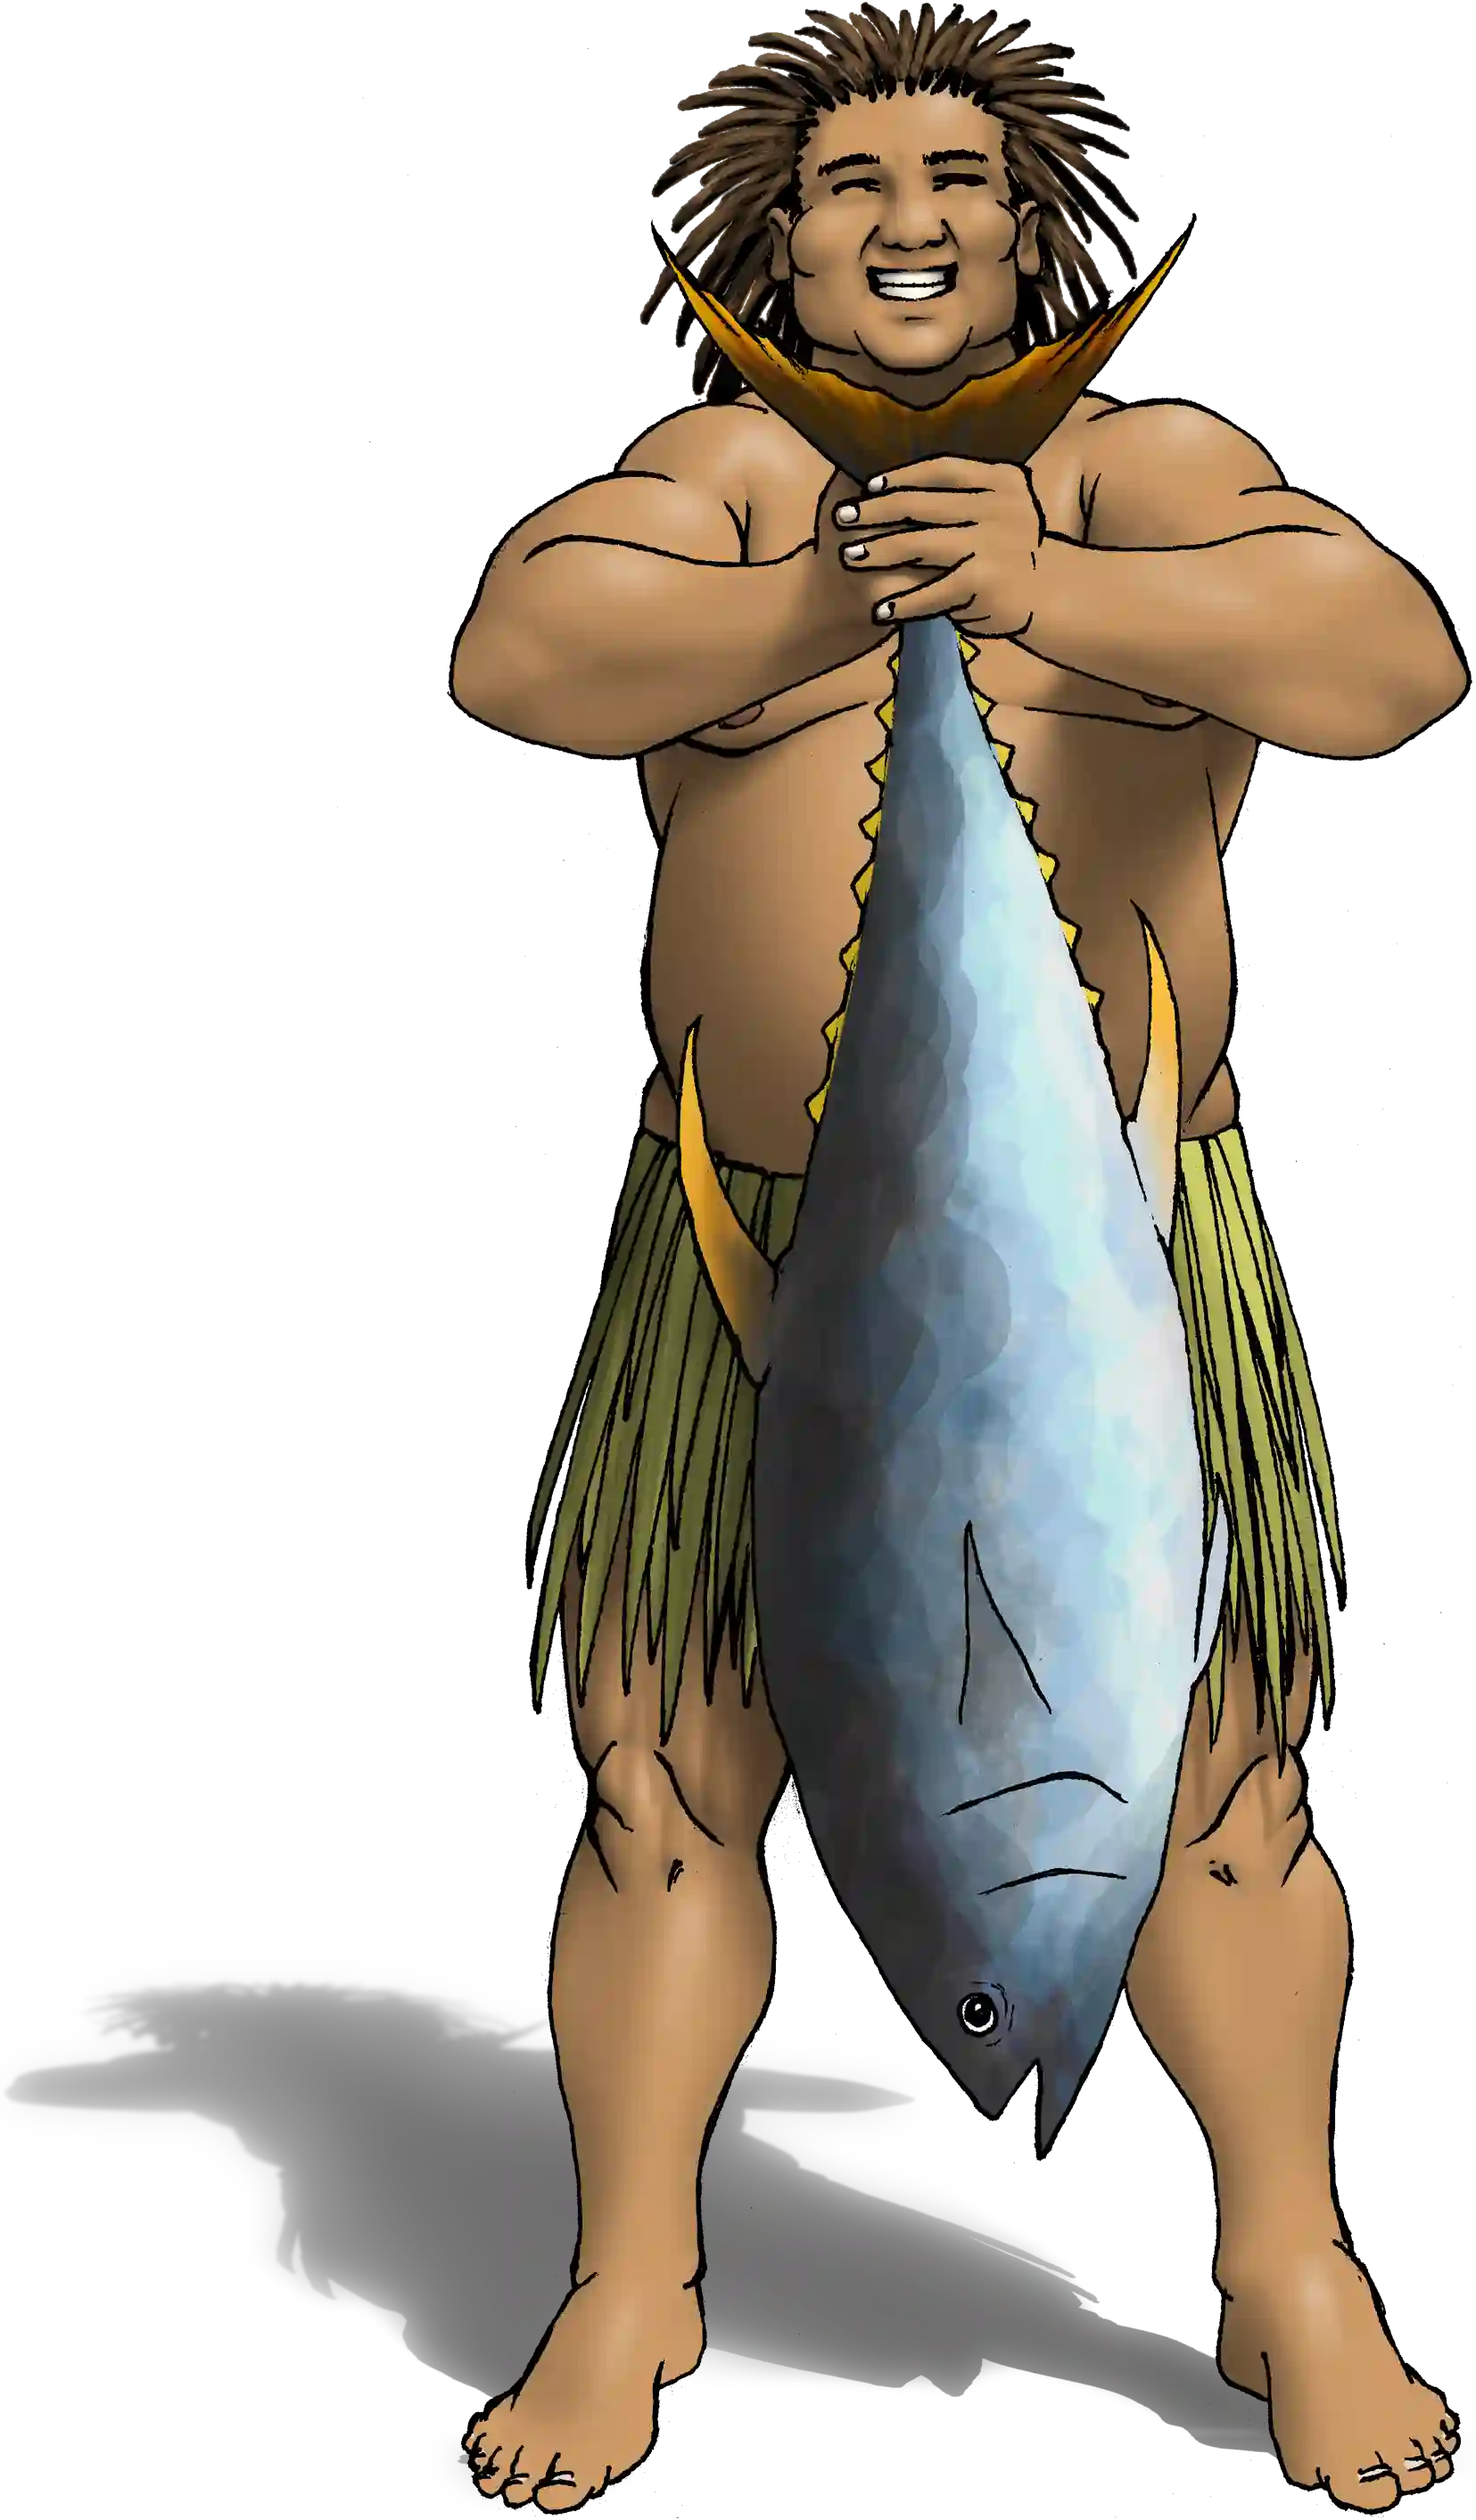 Hawaiian fisherman, holding a giant tuna.